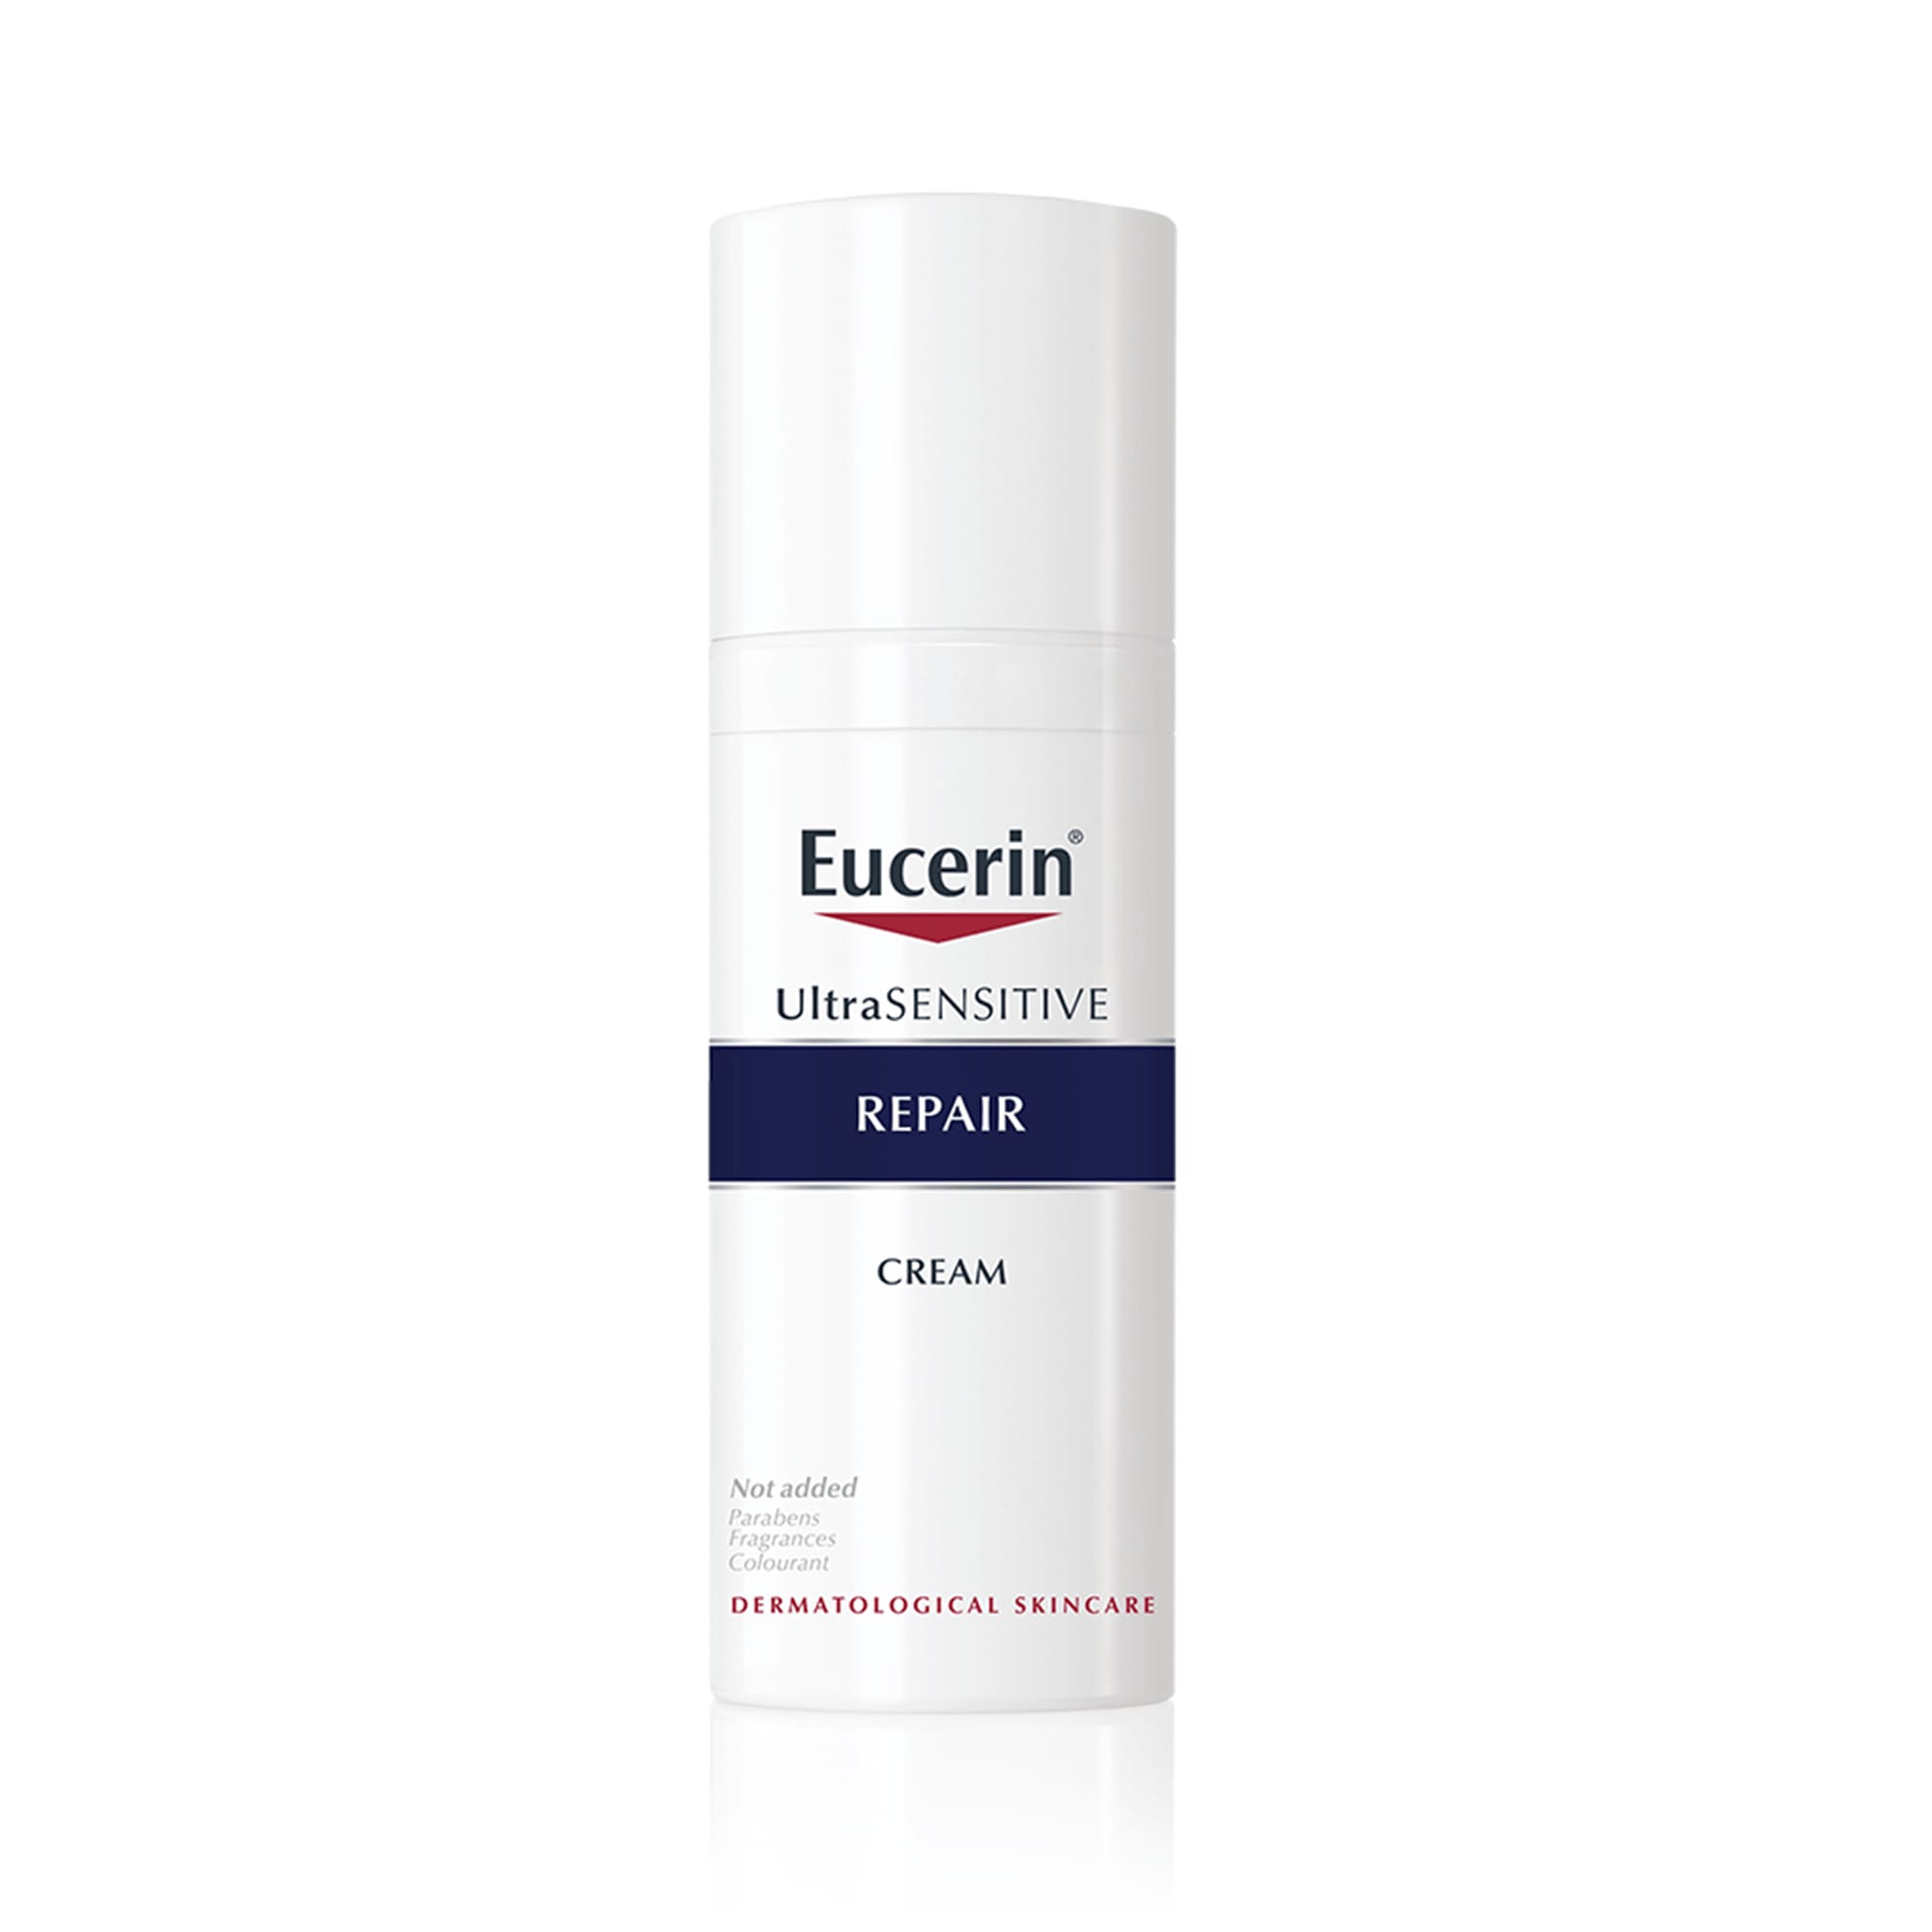 Eucerin Ultrasensitive Repair Cream